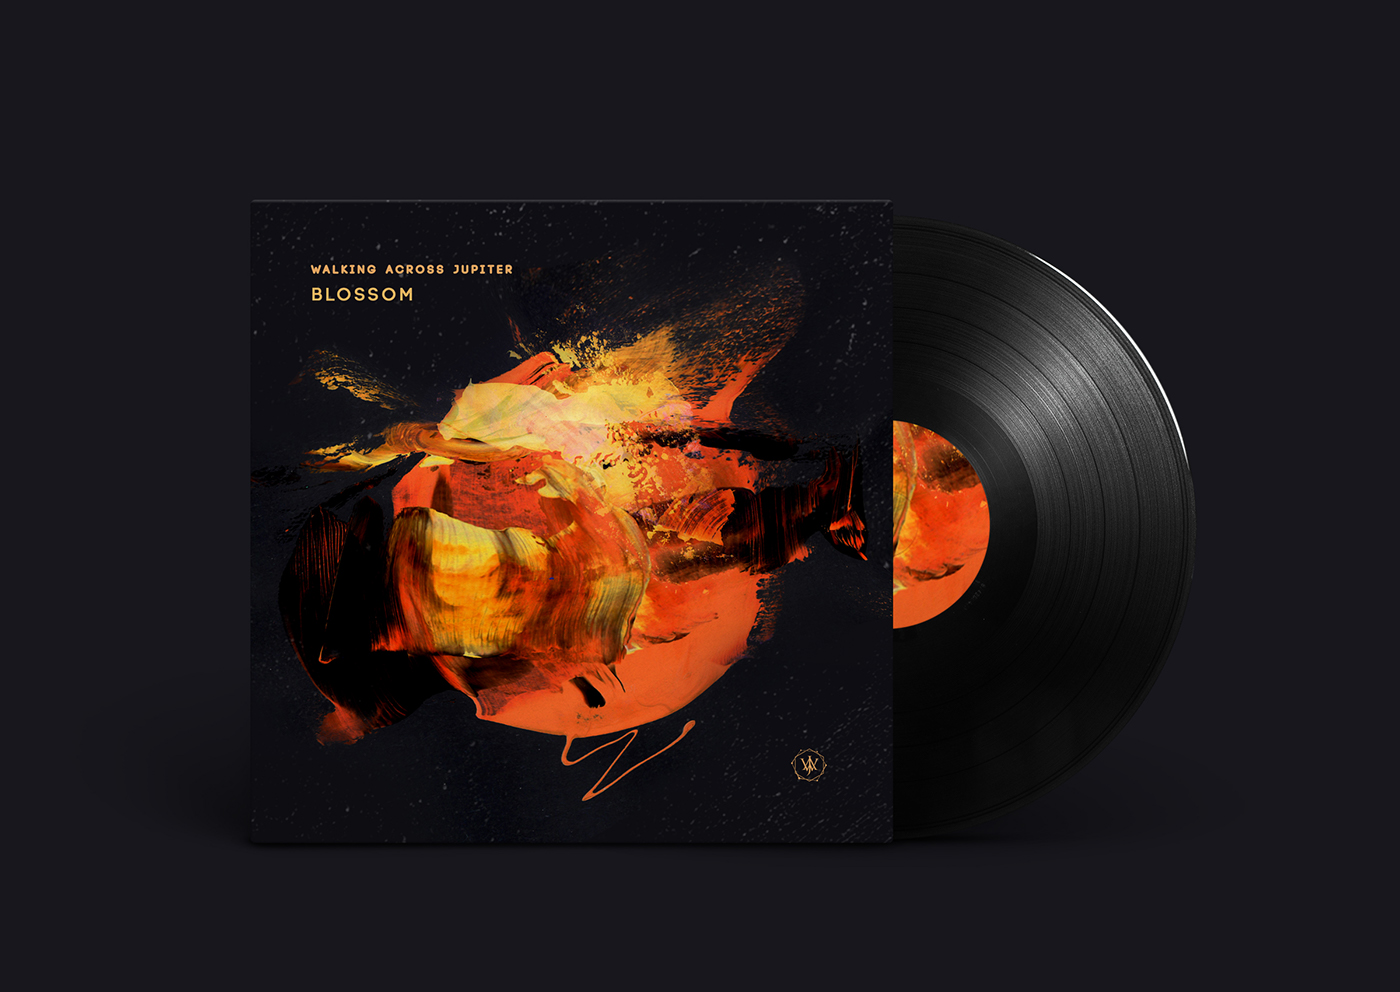 cover LP vinyl Single paint Transformation walking across Jupiter